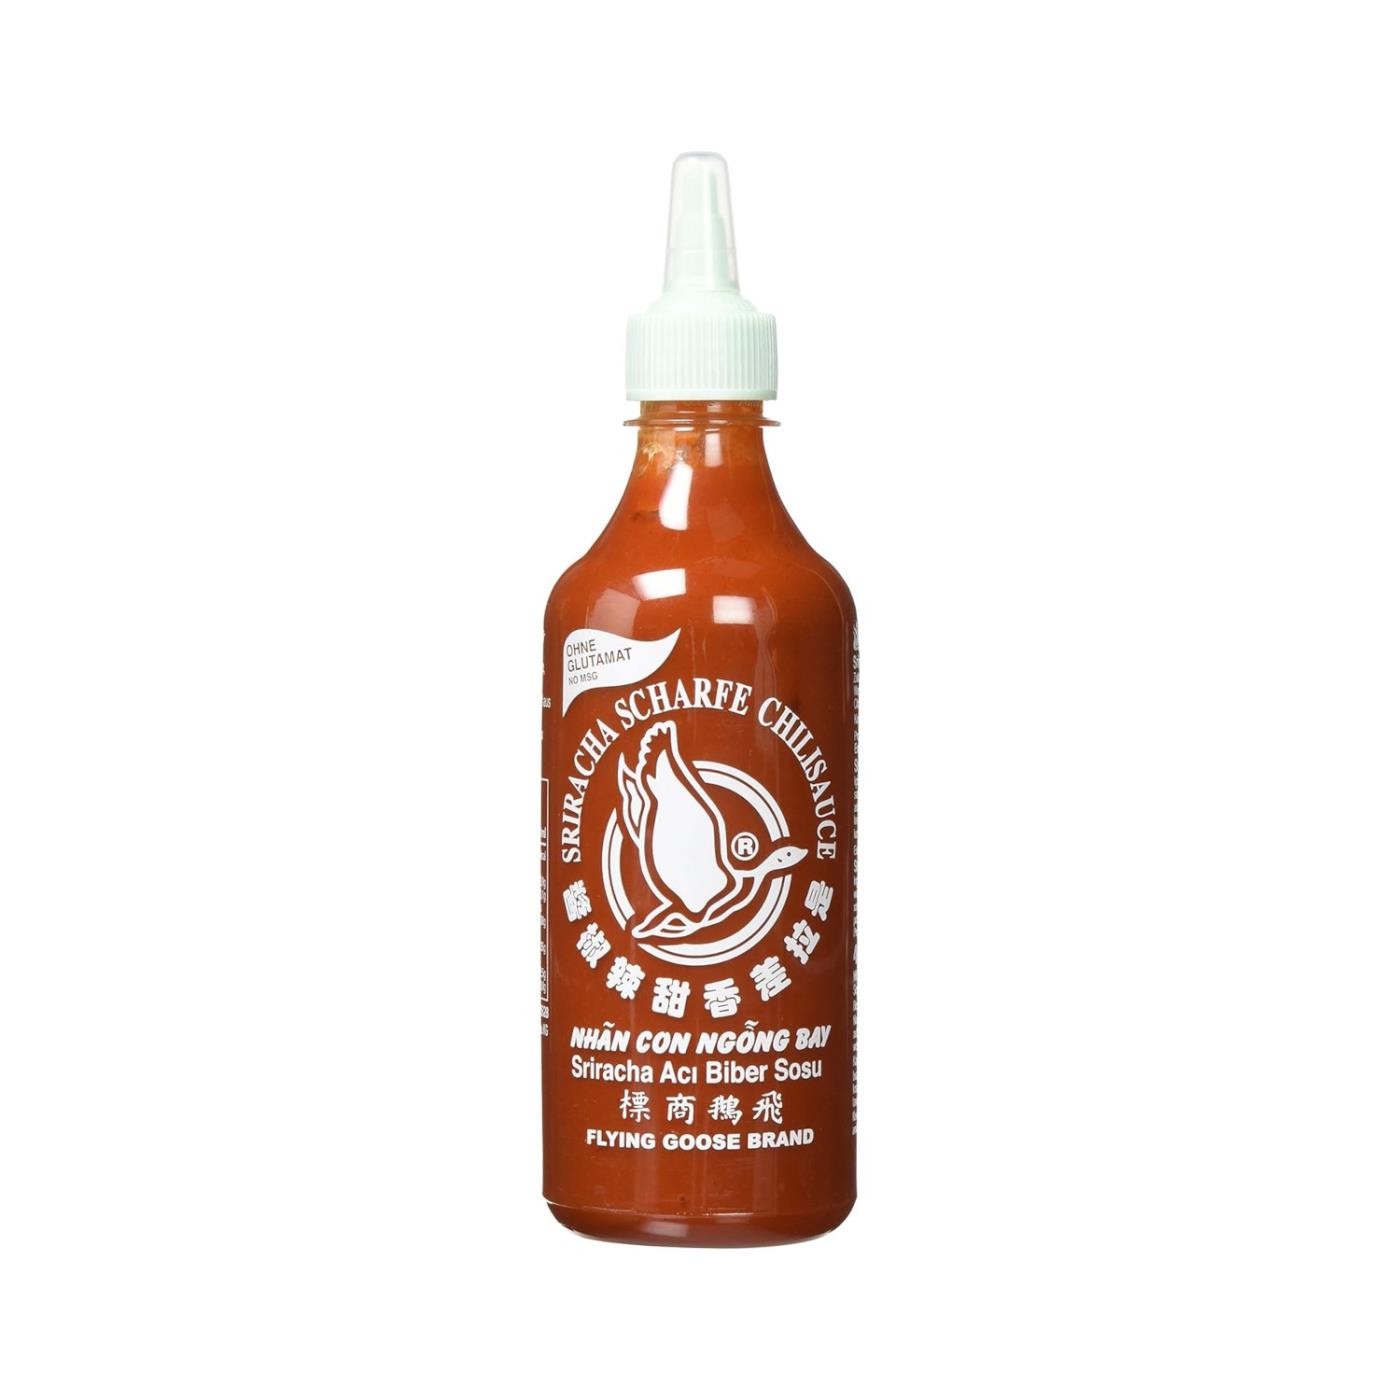 Flying Goose Sriracha no MSG 455ml